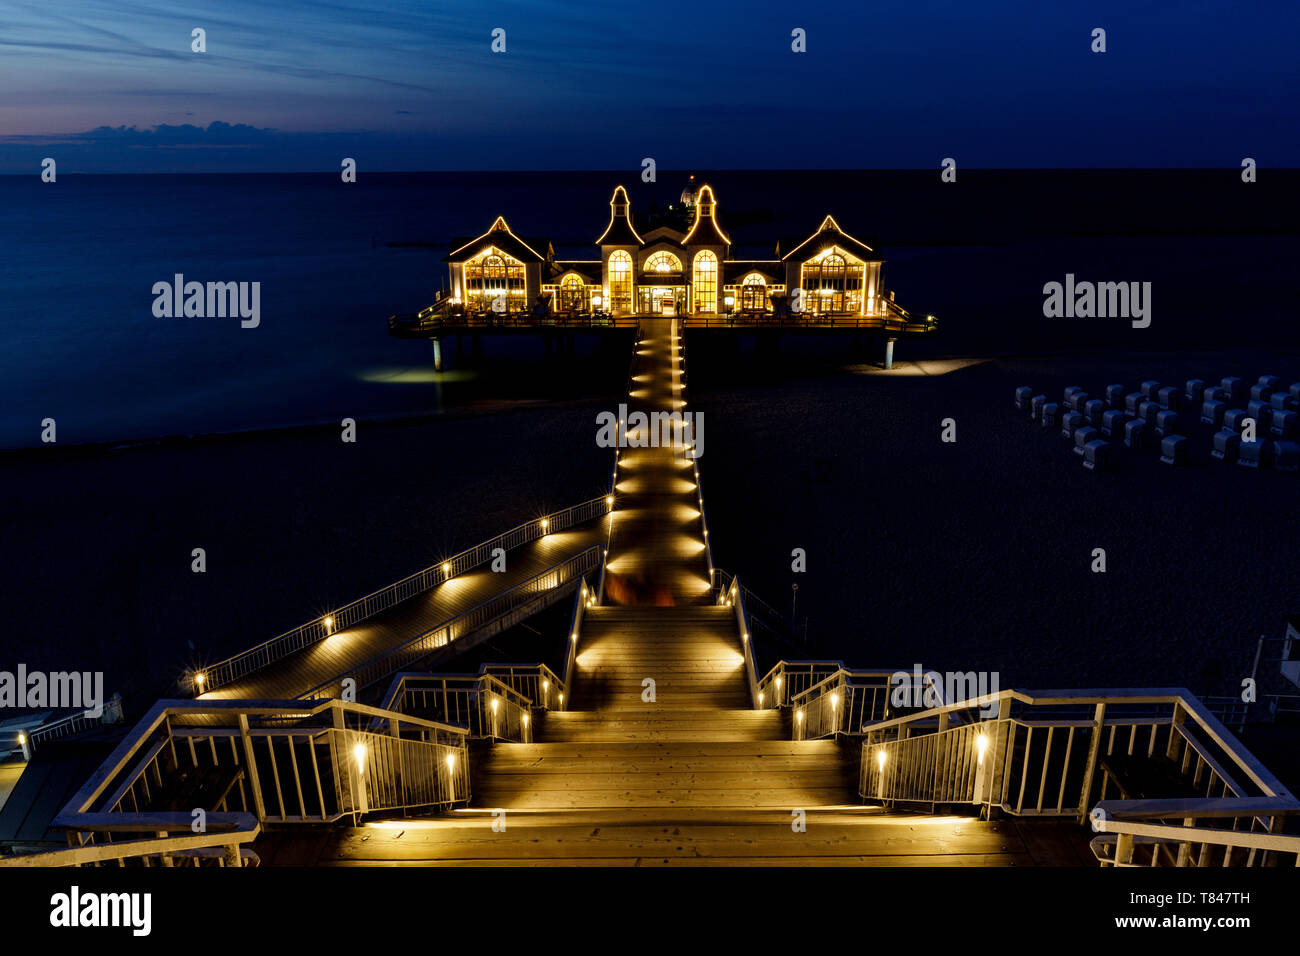 Pier traditionnel illuminé la nuit, elevated view, Sellin, Rugen, Mecklenburg-Vorpommern, Allemagne Banque D'Images